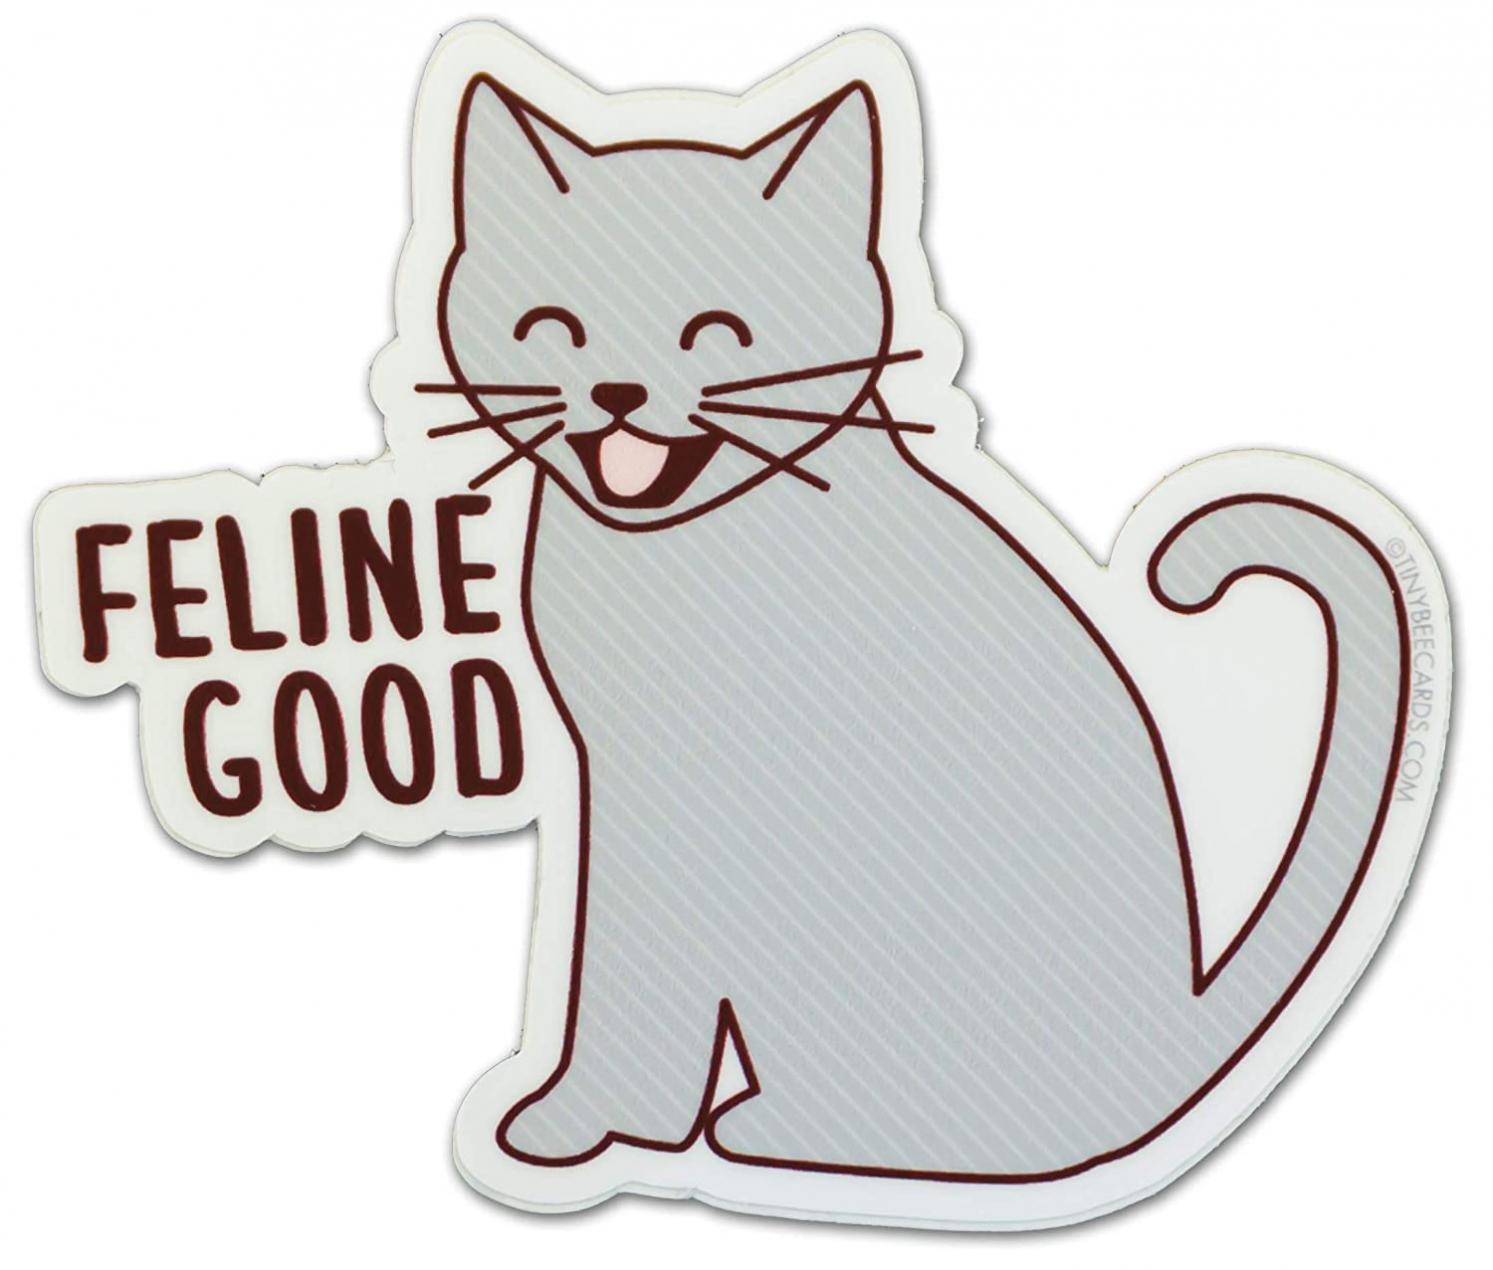 Funny Cat Vinyl Sticker"Feline Good" - Funny Pun Cat Lover Gift, Laptop Bike Car or Water Bottle Decal, Dishwasher Safe